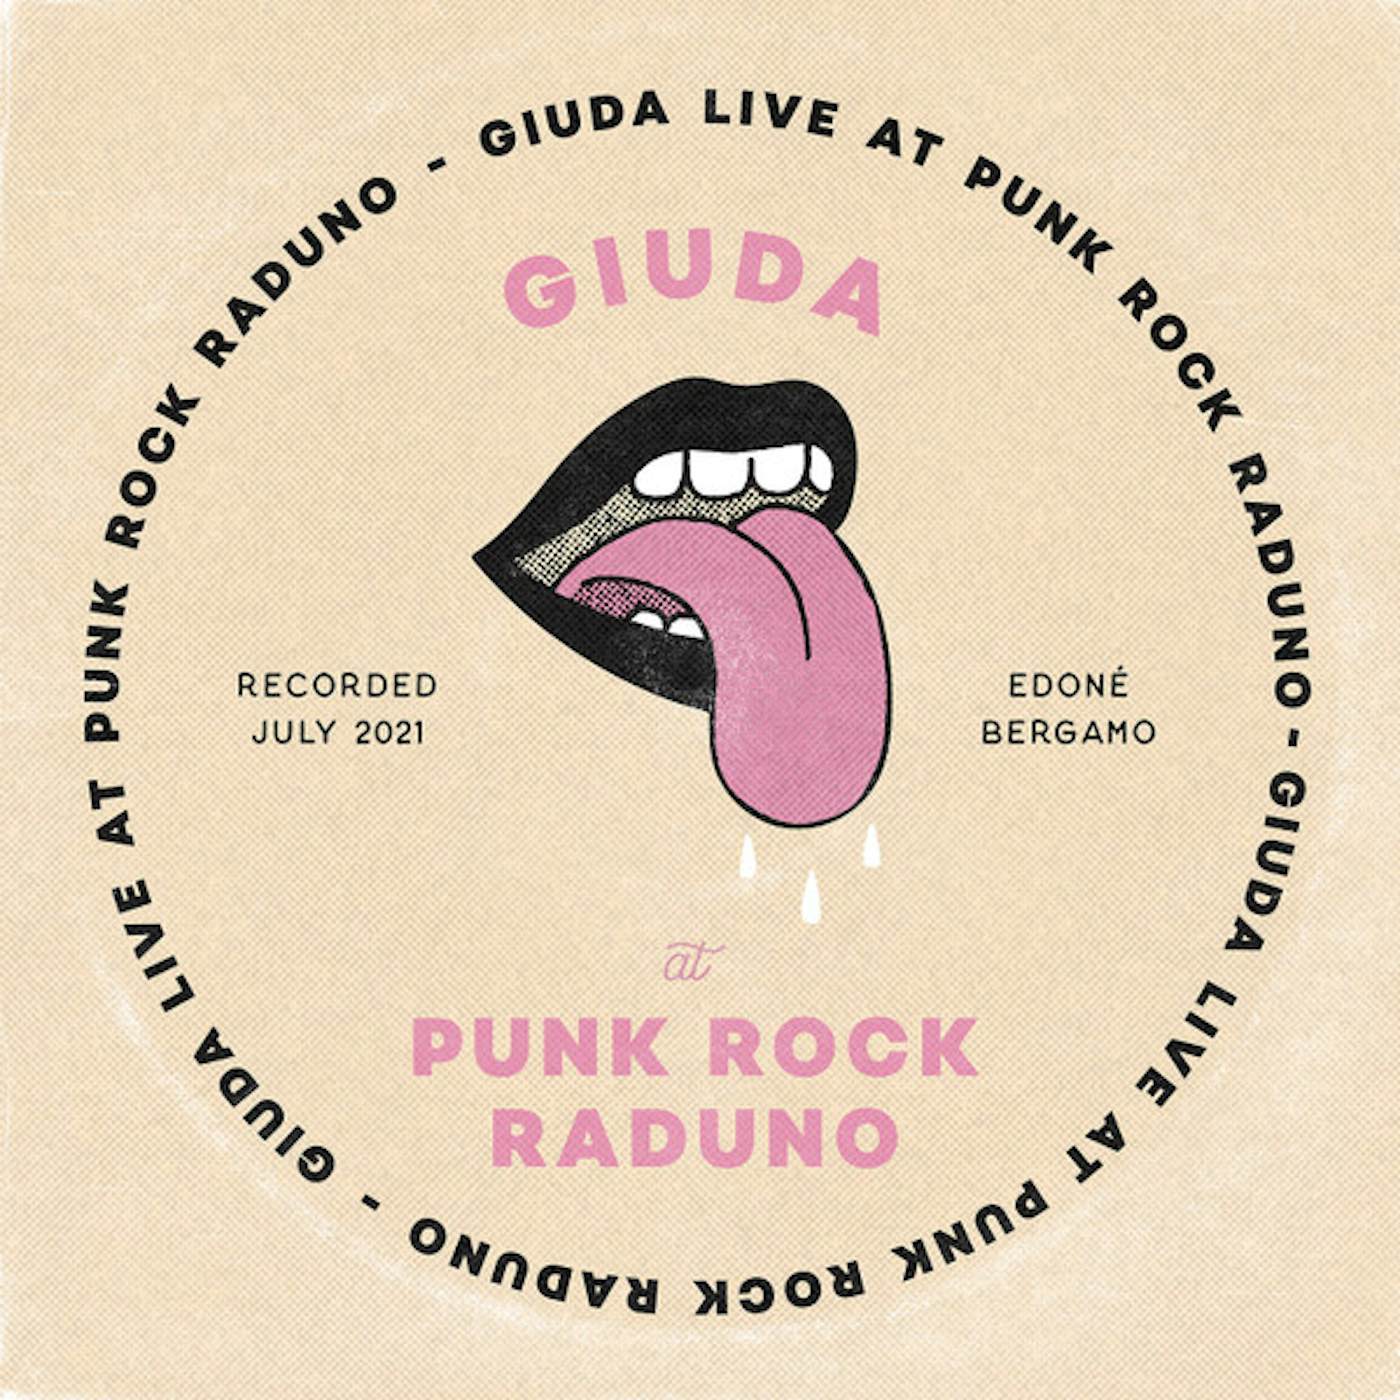 Giuda Live at Punk Rock Raduno Vinyl Record